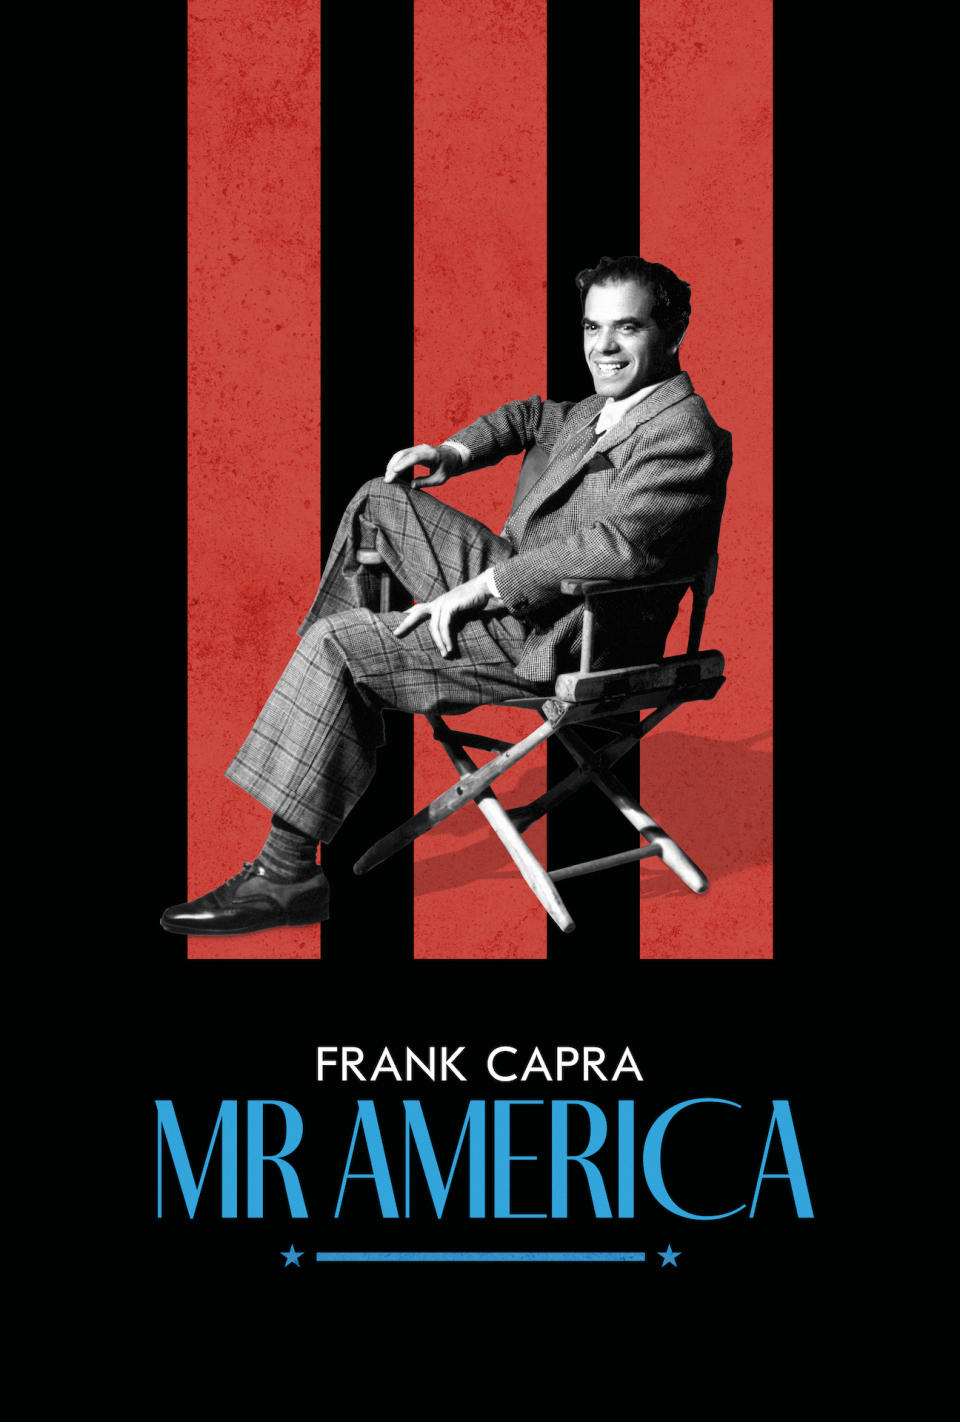 'Frank Capra: Mr. America' poster